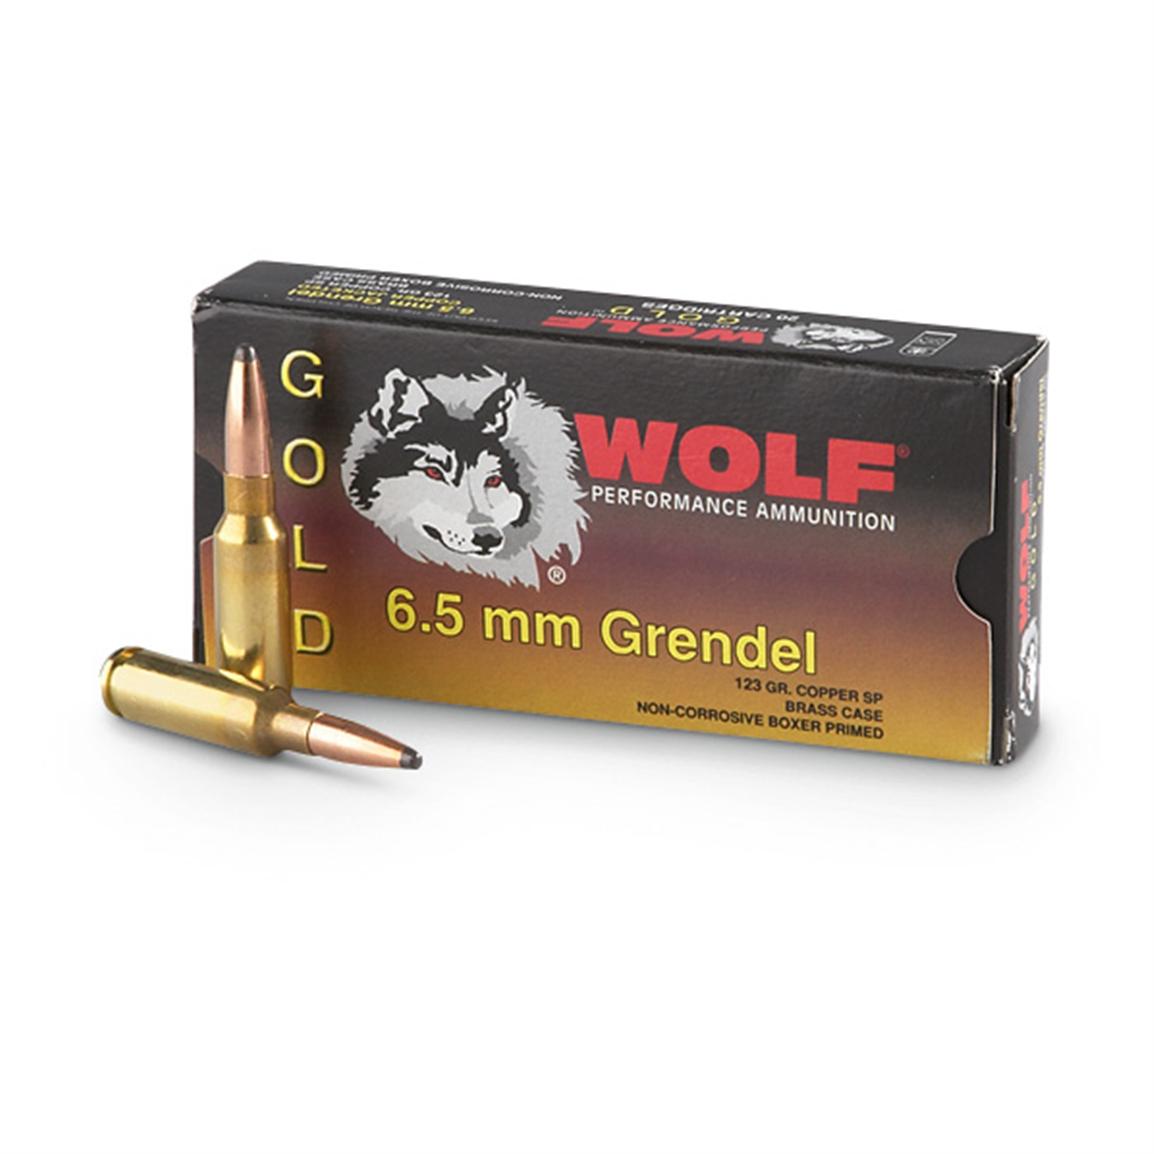 Wolf, 6.5 Grendel, PSPBT, 123 Grain, 200 Rounds - 211520, 6.5 Grendel Ammo at Sportsman\u0026#39;s Guide